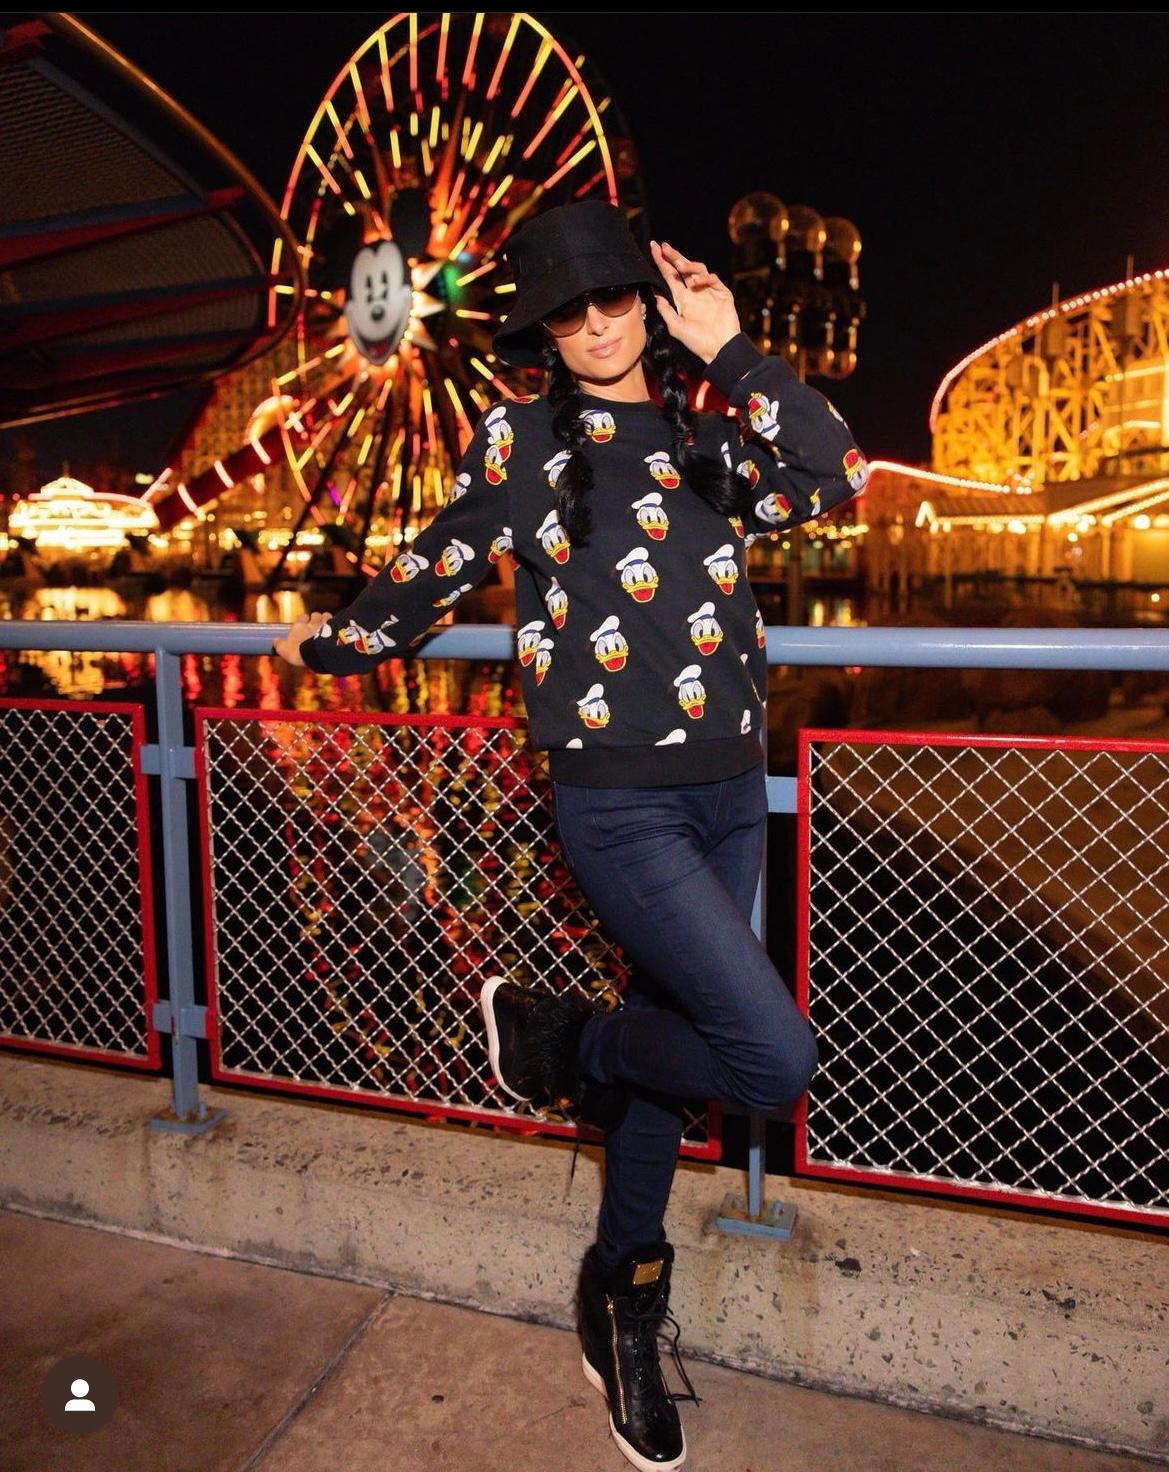 Paris Hilton visits Disneyland